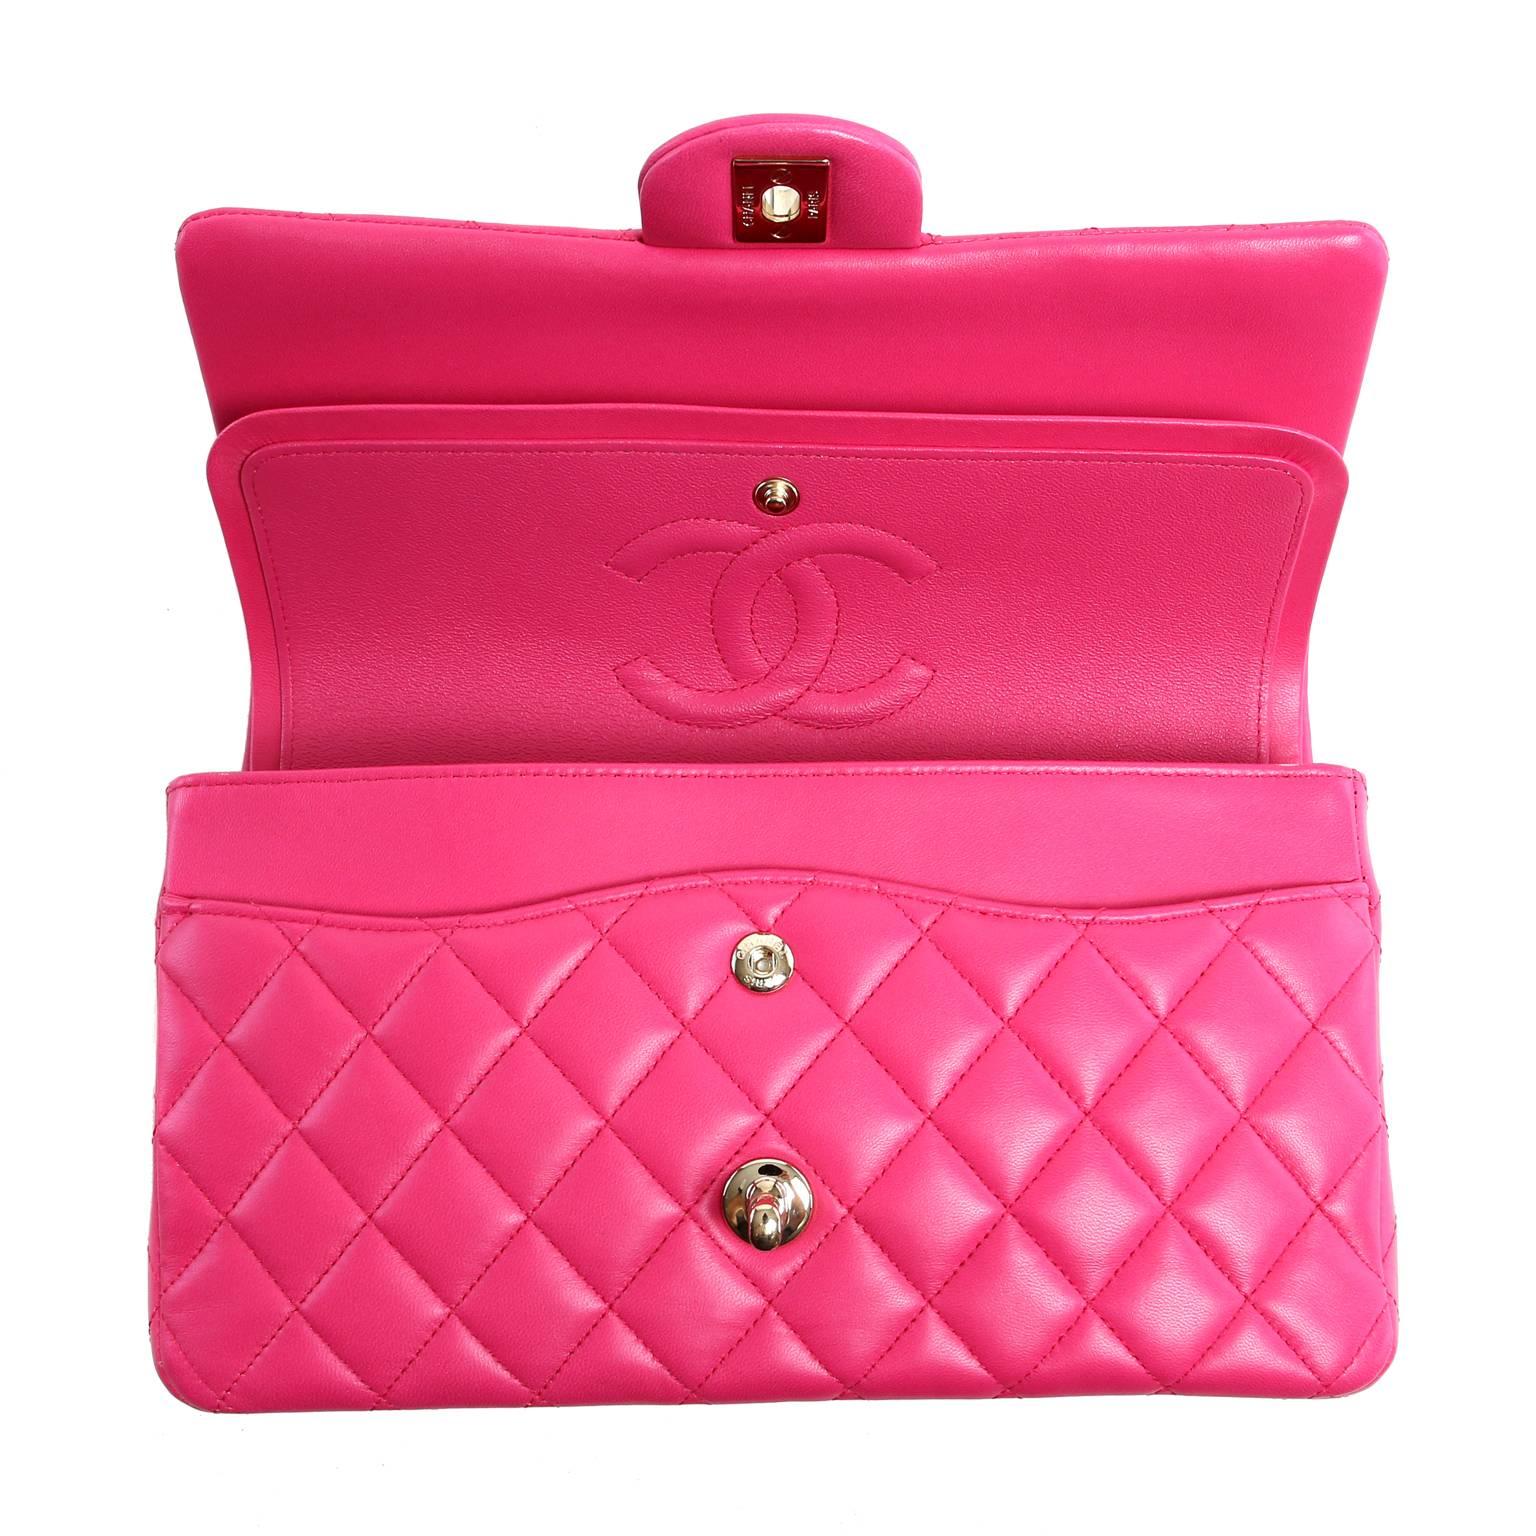 Chanel Fuchsia Pink Leather Medium Double Flap Classic 2